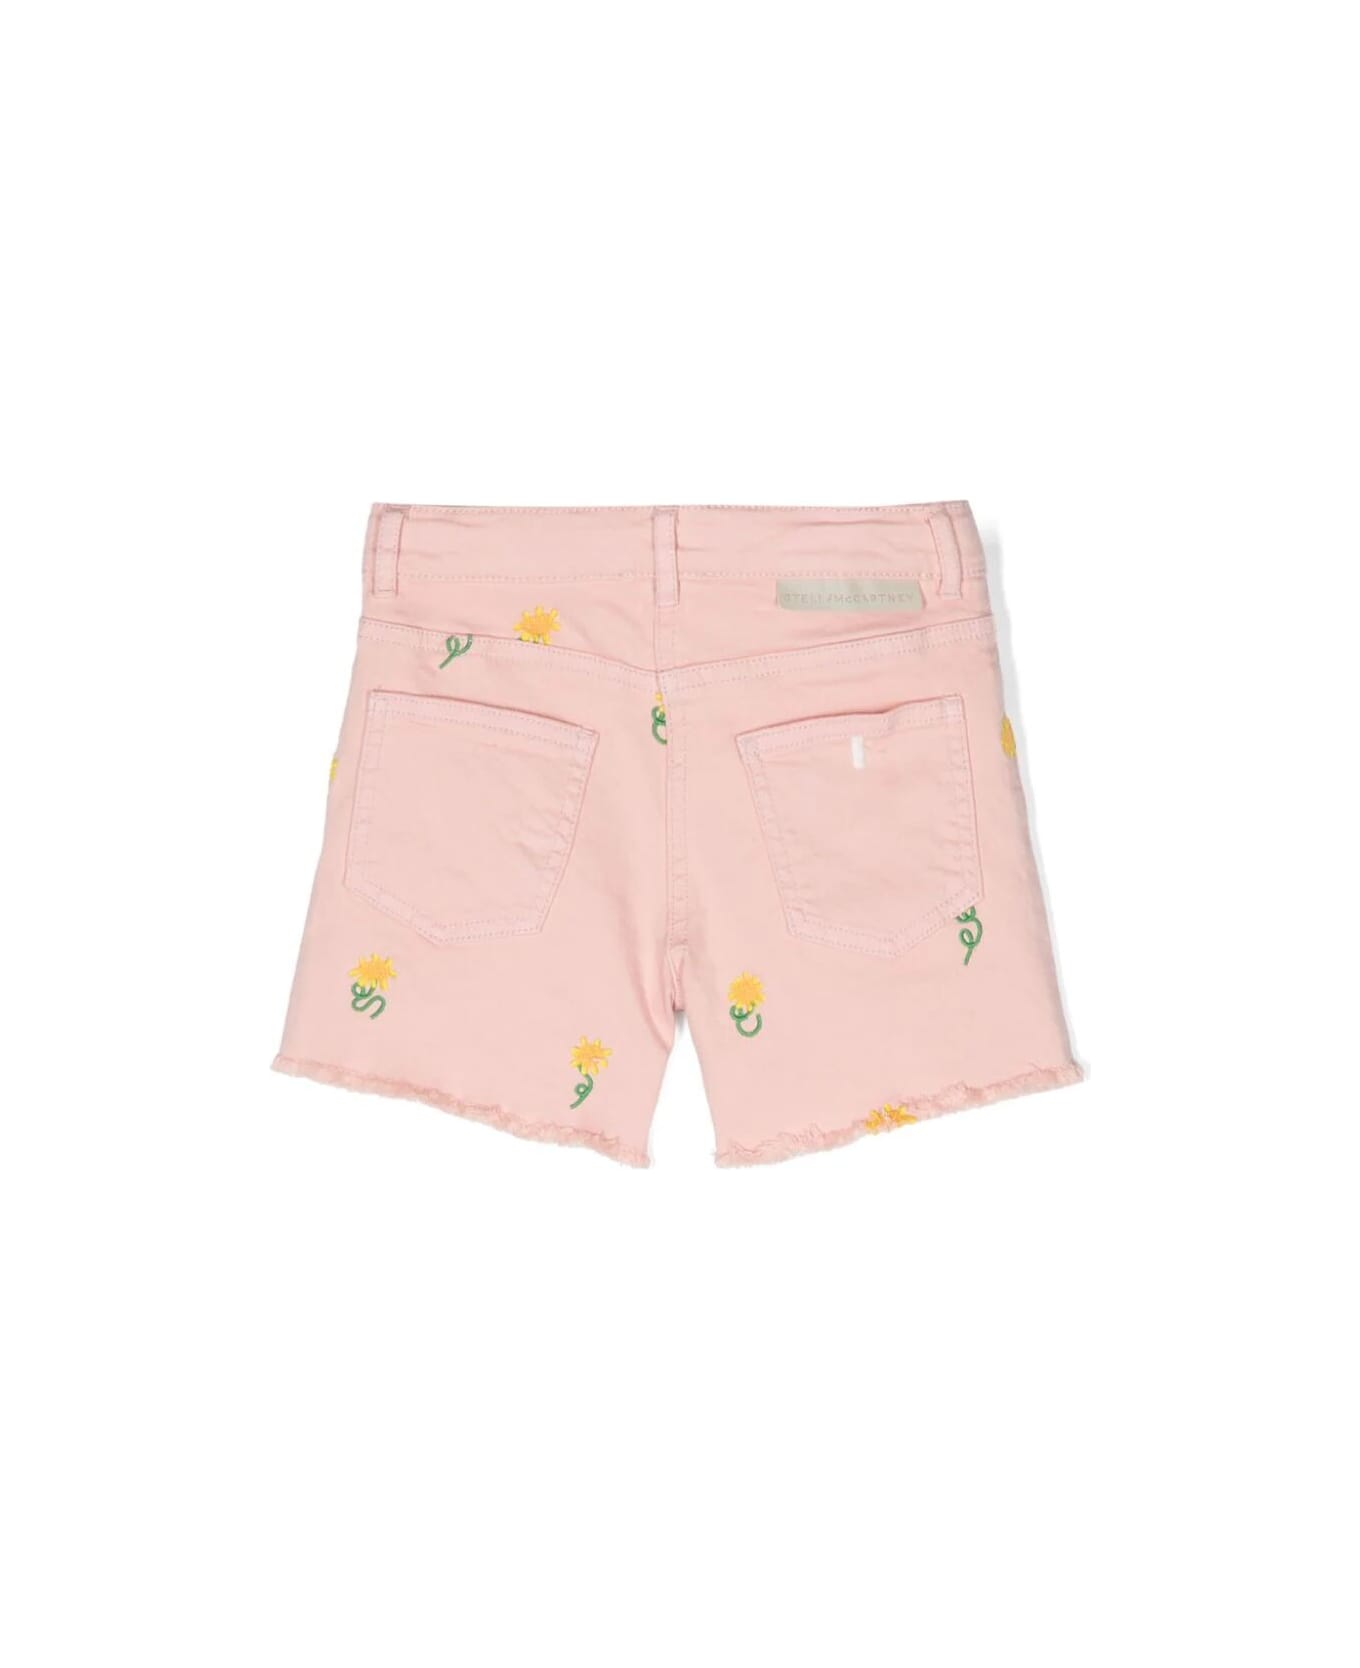 Stella McCartney Kids Shorts - Em Pink Embroidery